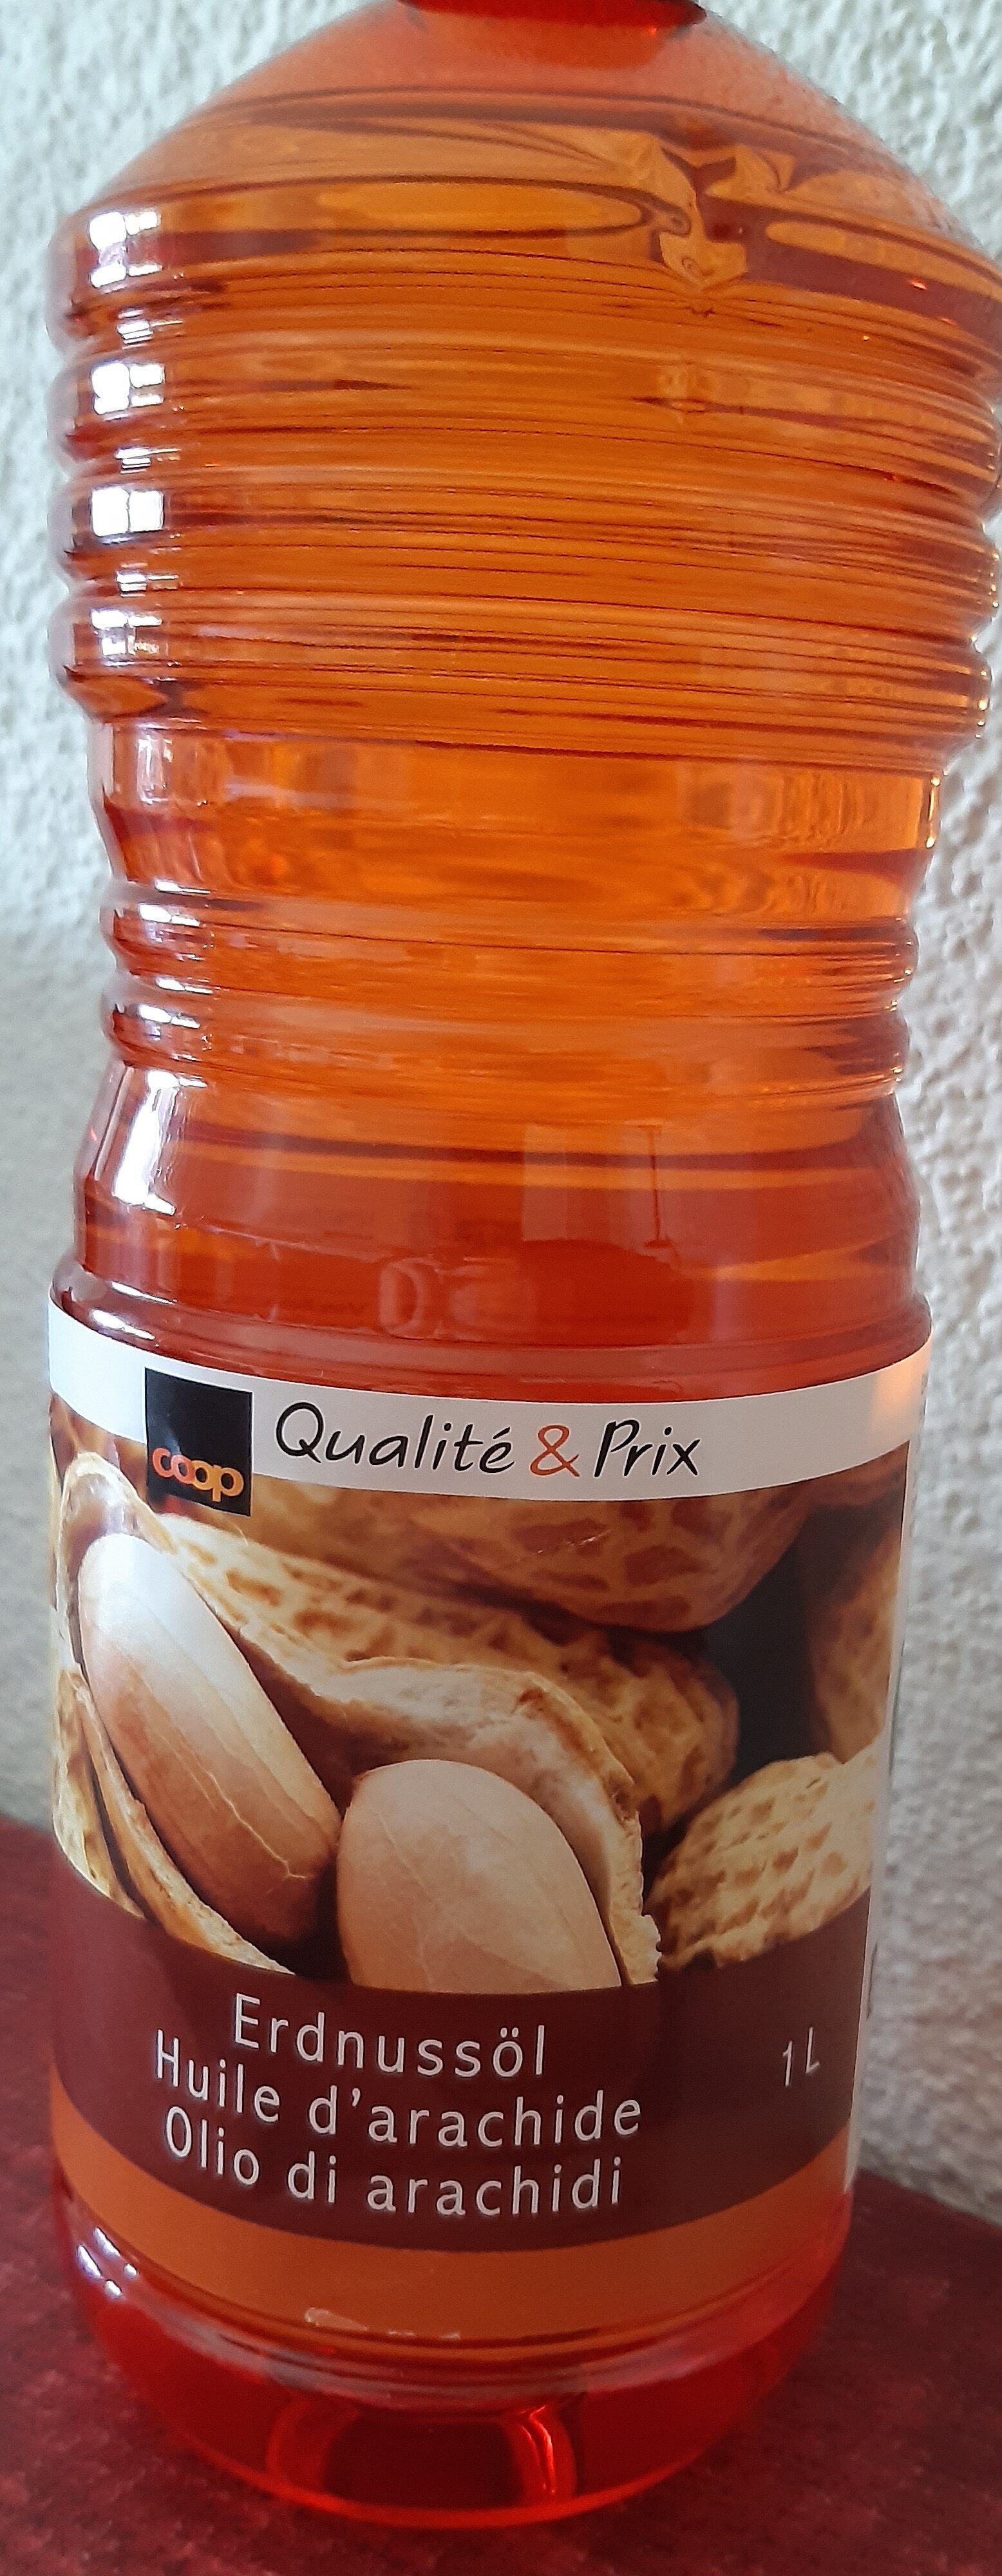 Erdnussöl | Huile d'arachide - Produkt - fr